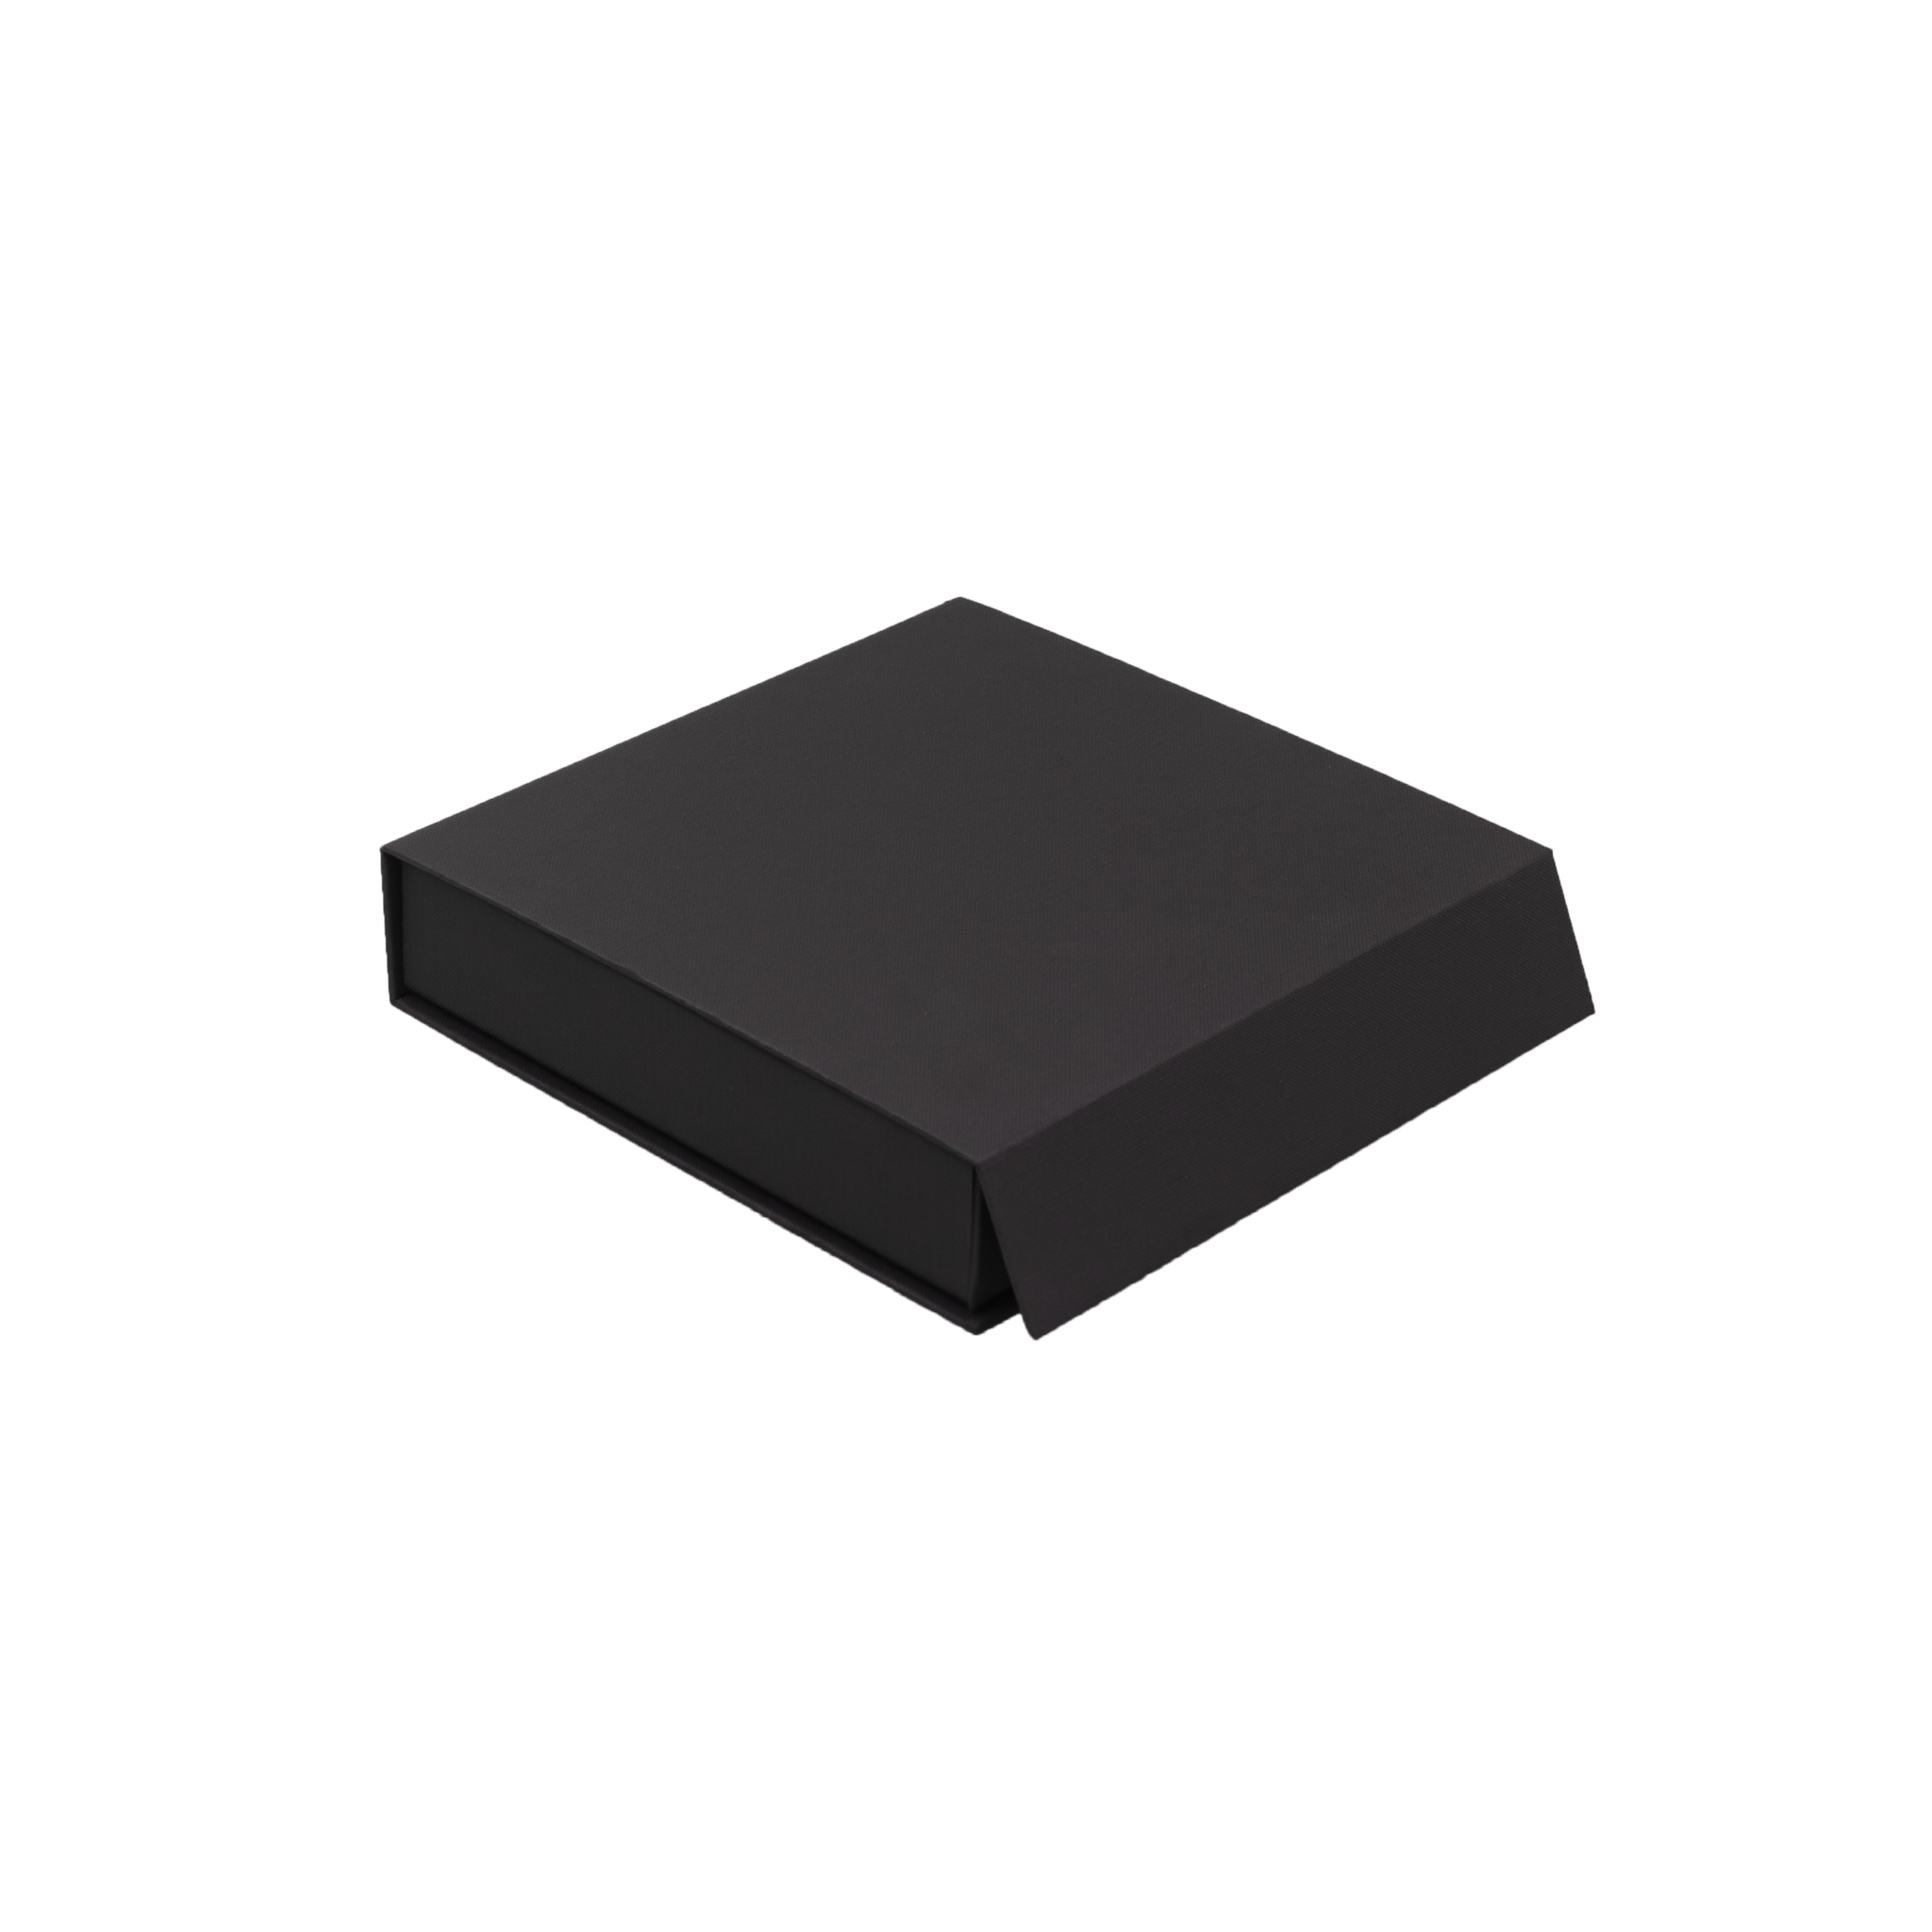 Magnet box (black) - 25 bonbons - 12 pieces